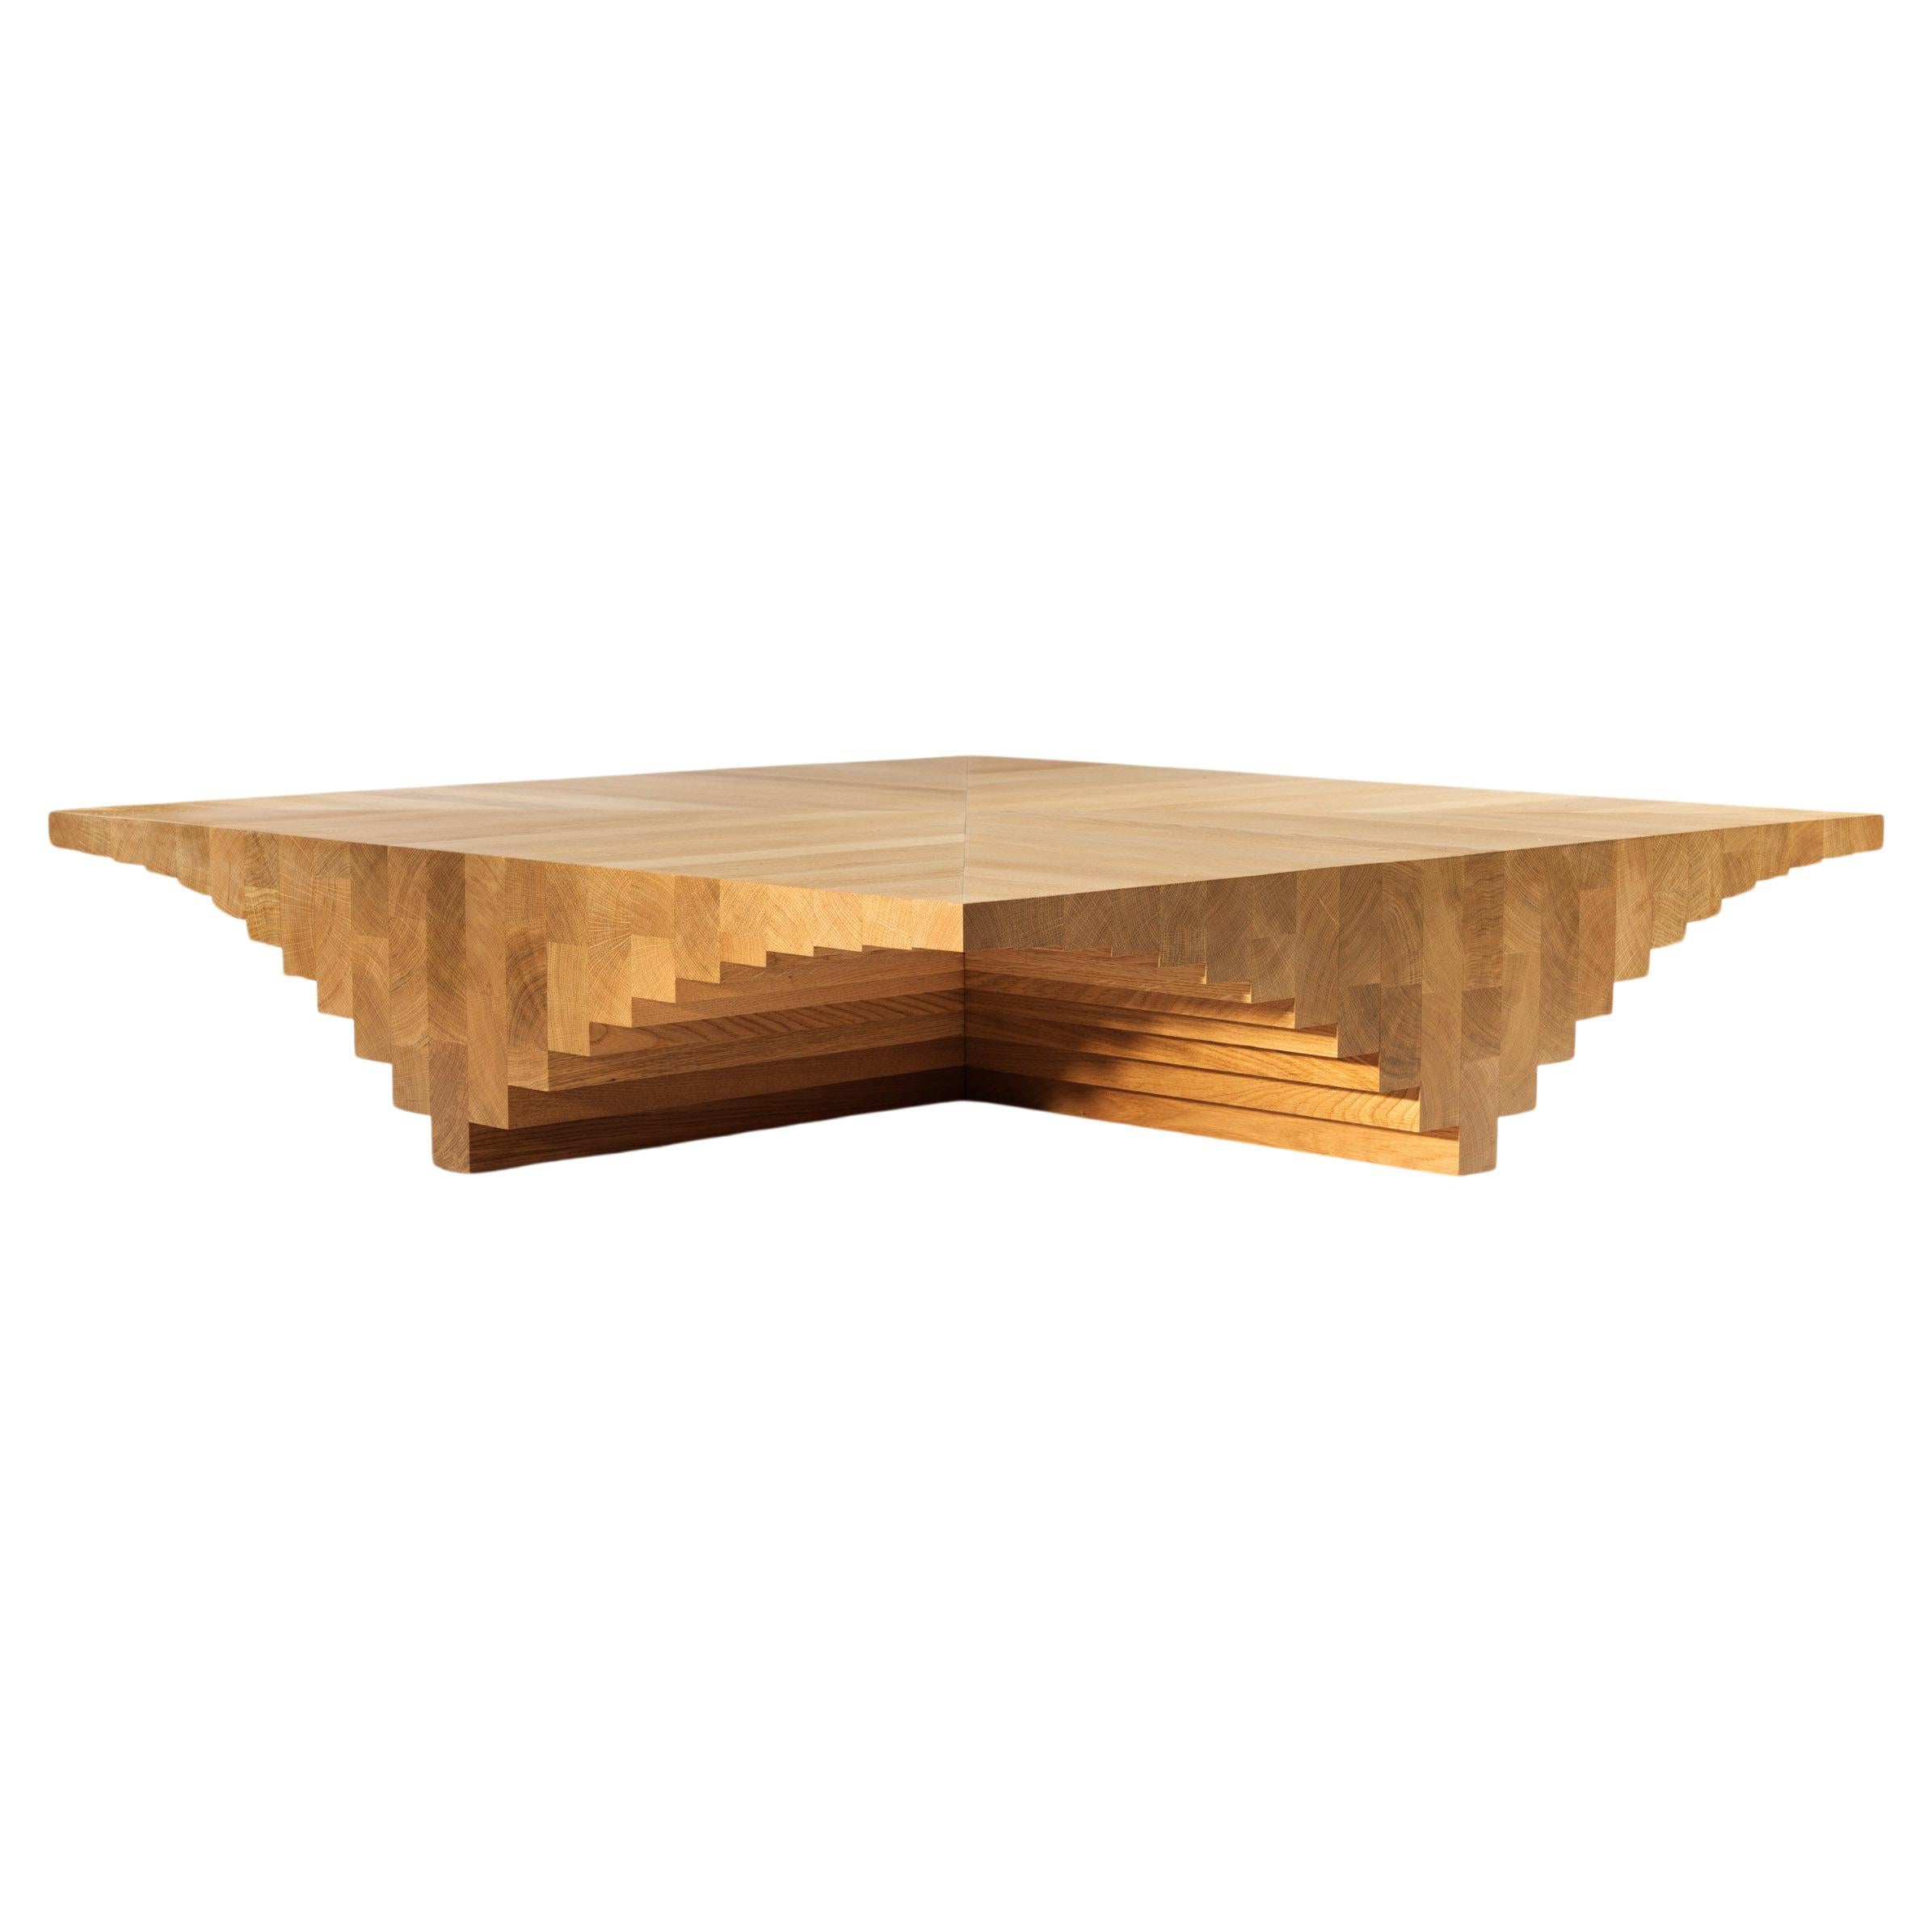 Brown solid oak ater coffee table by Tim Vranken